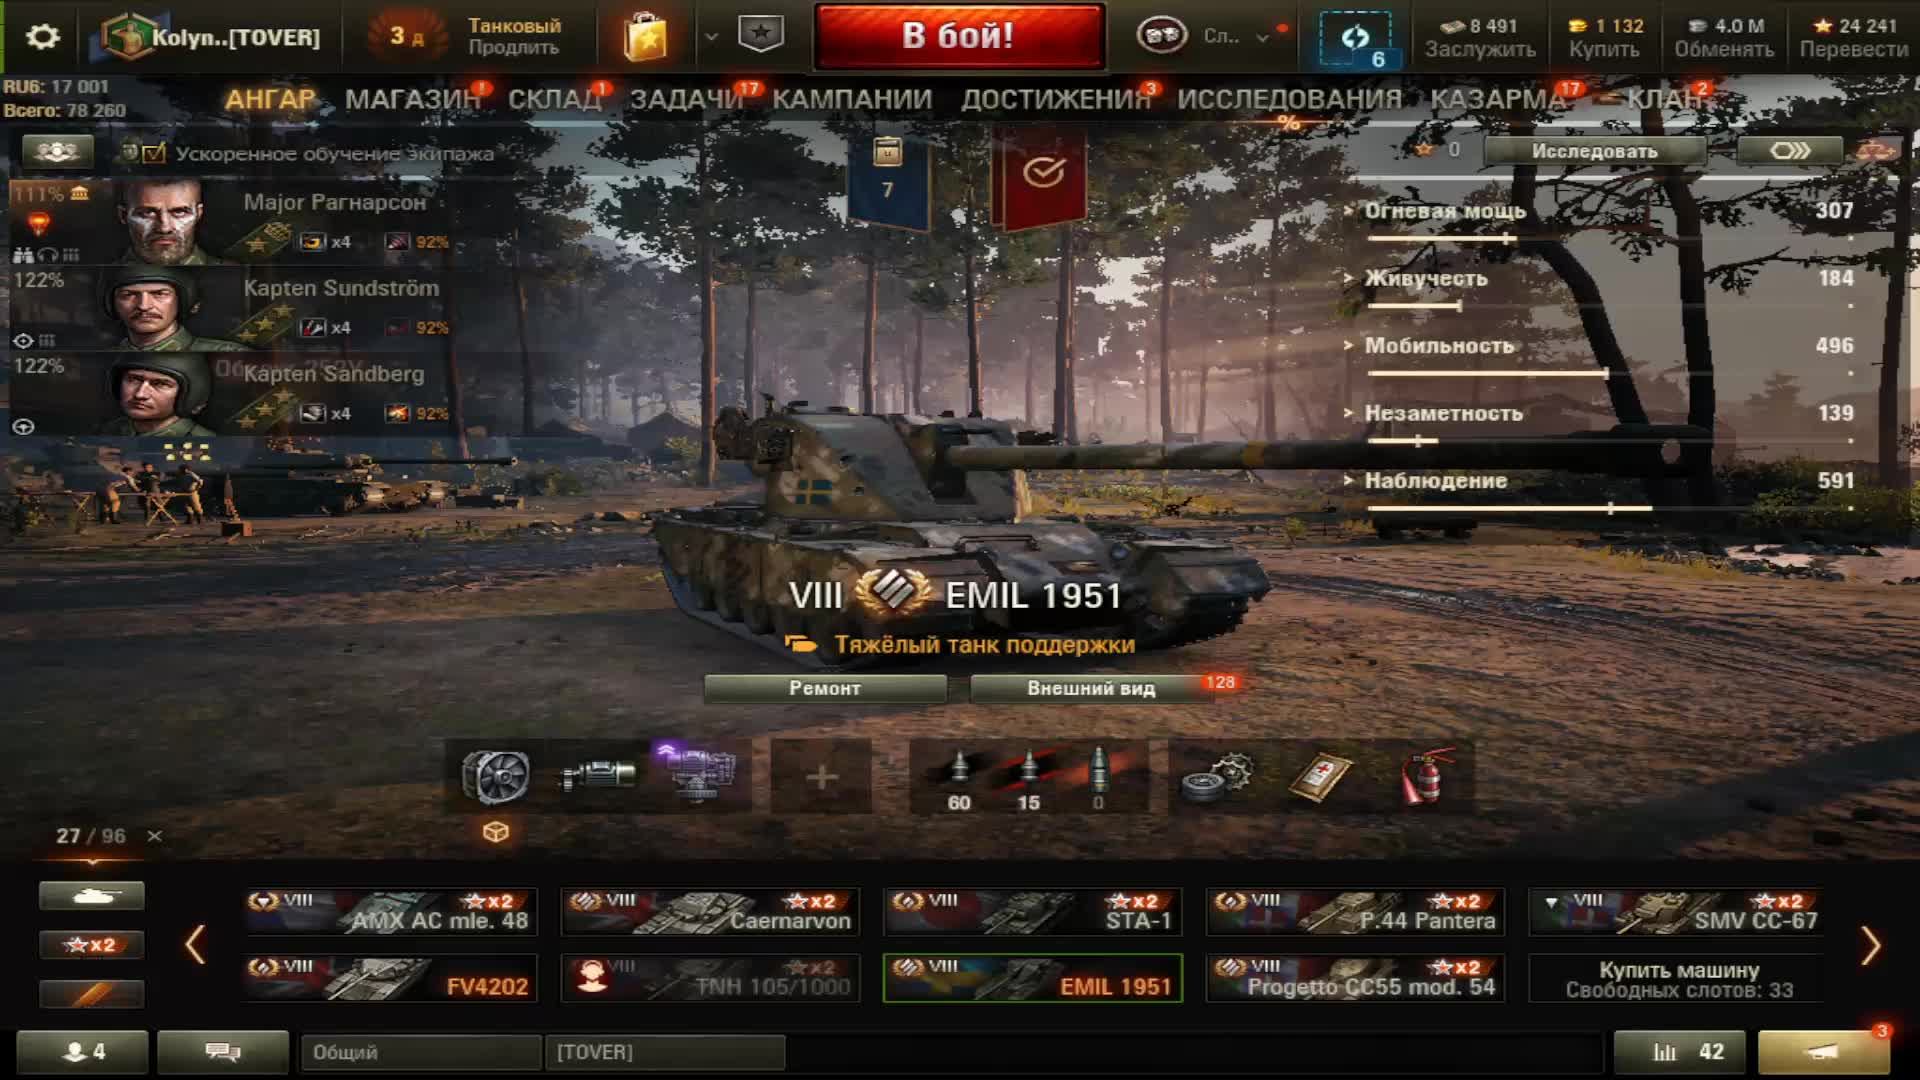 World_of_Tanks_RU